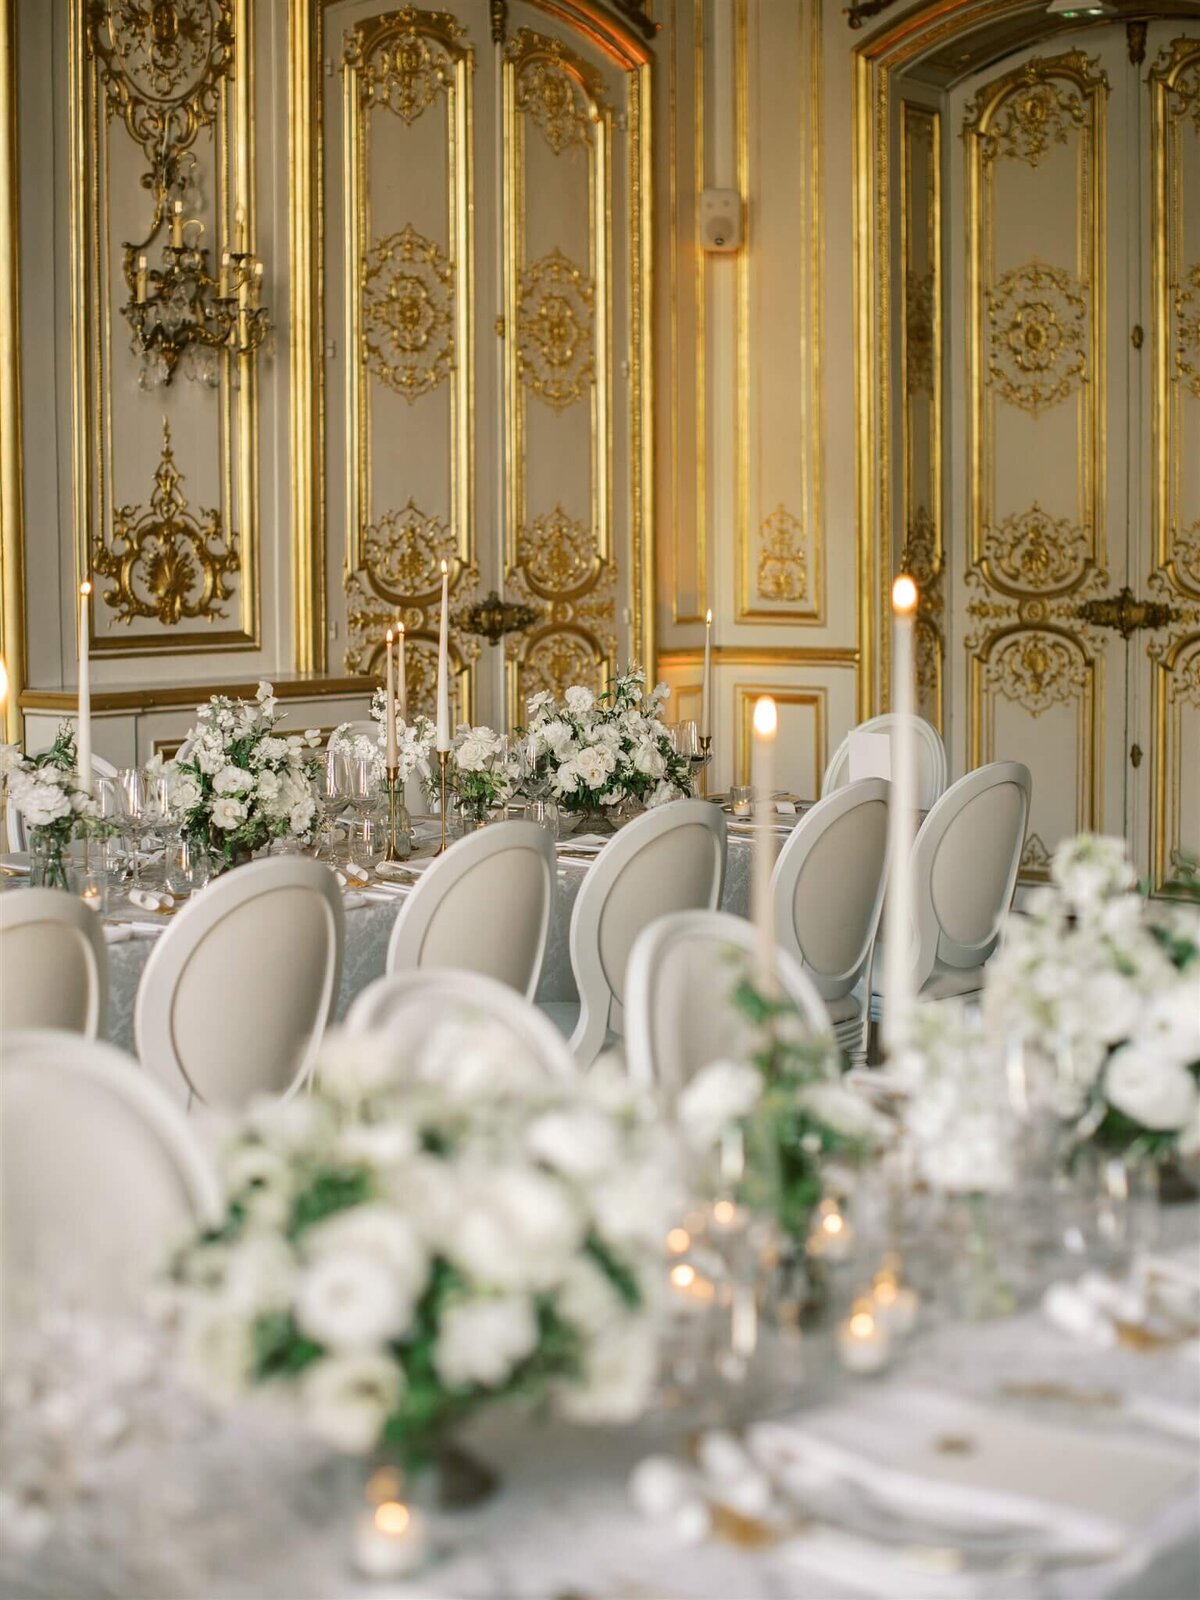 DianeSoteroPhotography_Wedding_StJamesHotel_HotelLeMarois_Paris_France_435